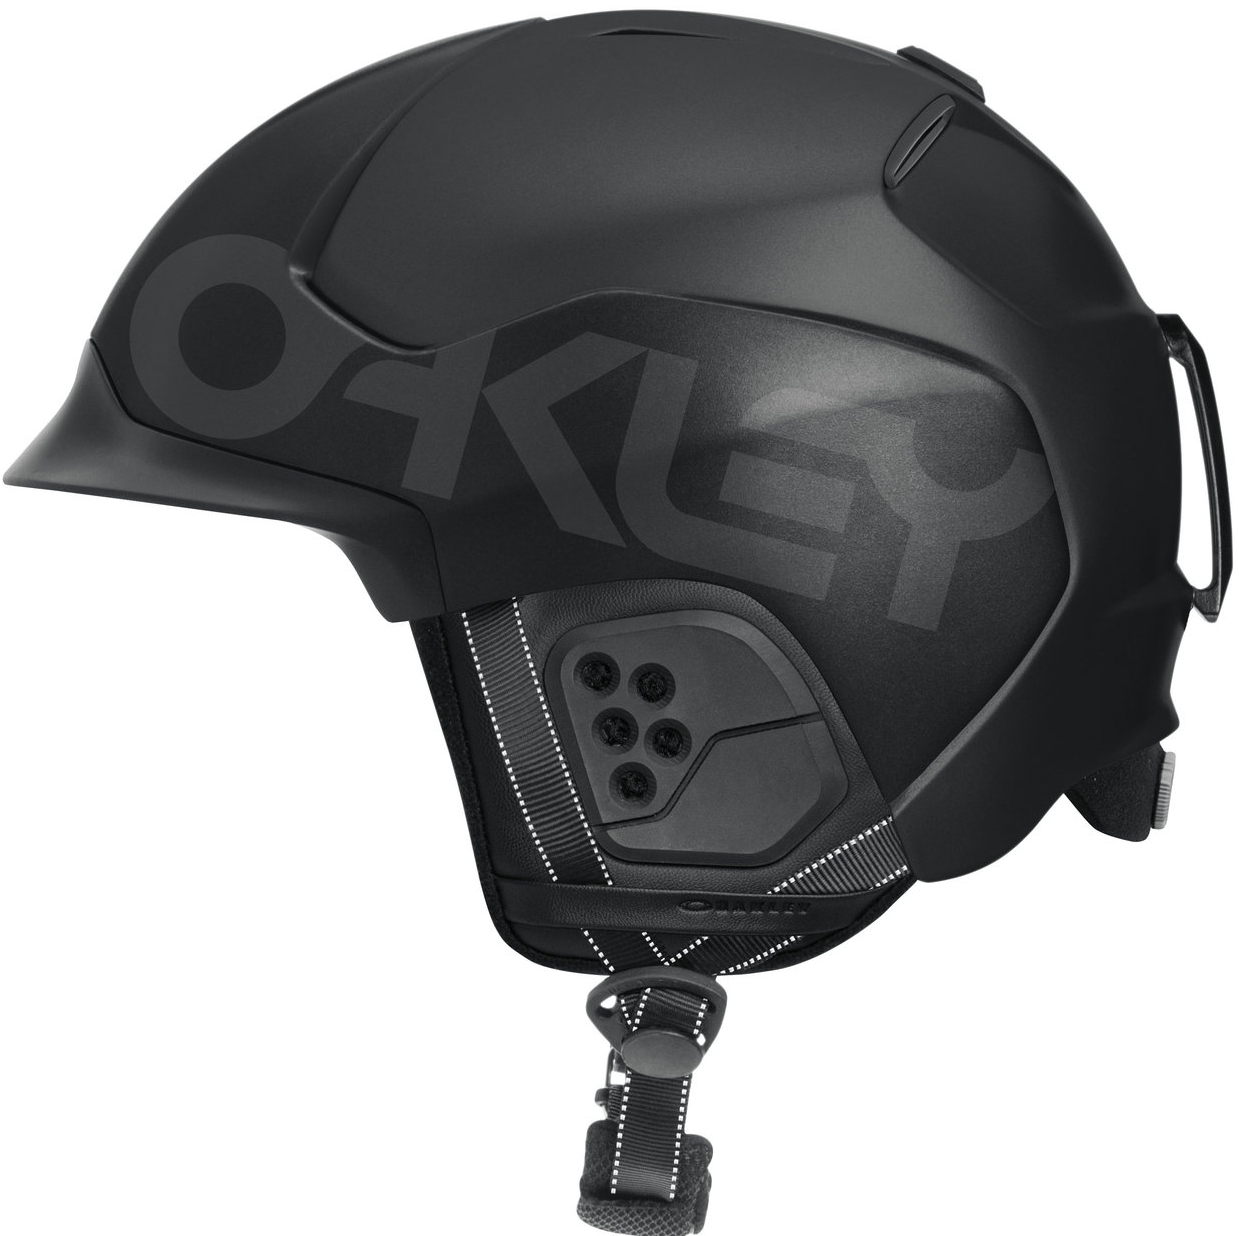 Oakley MOD 5 Premium Helmet, $209.95